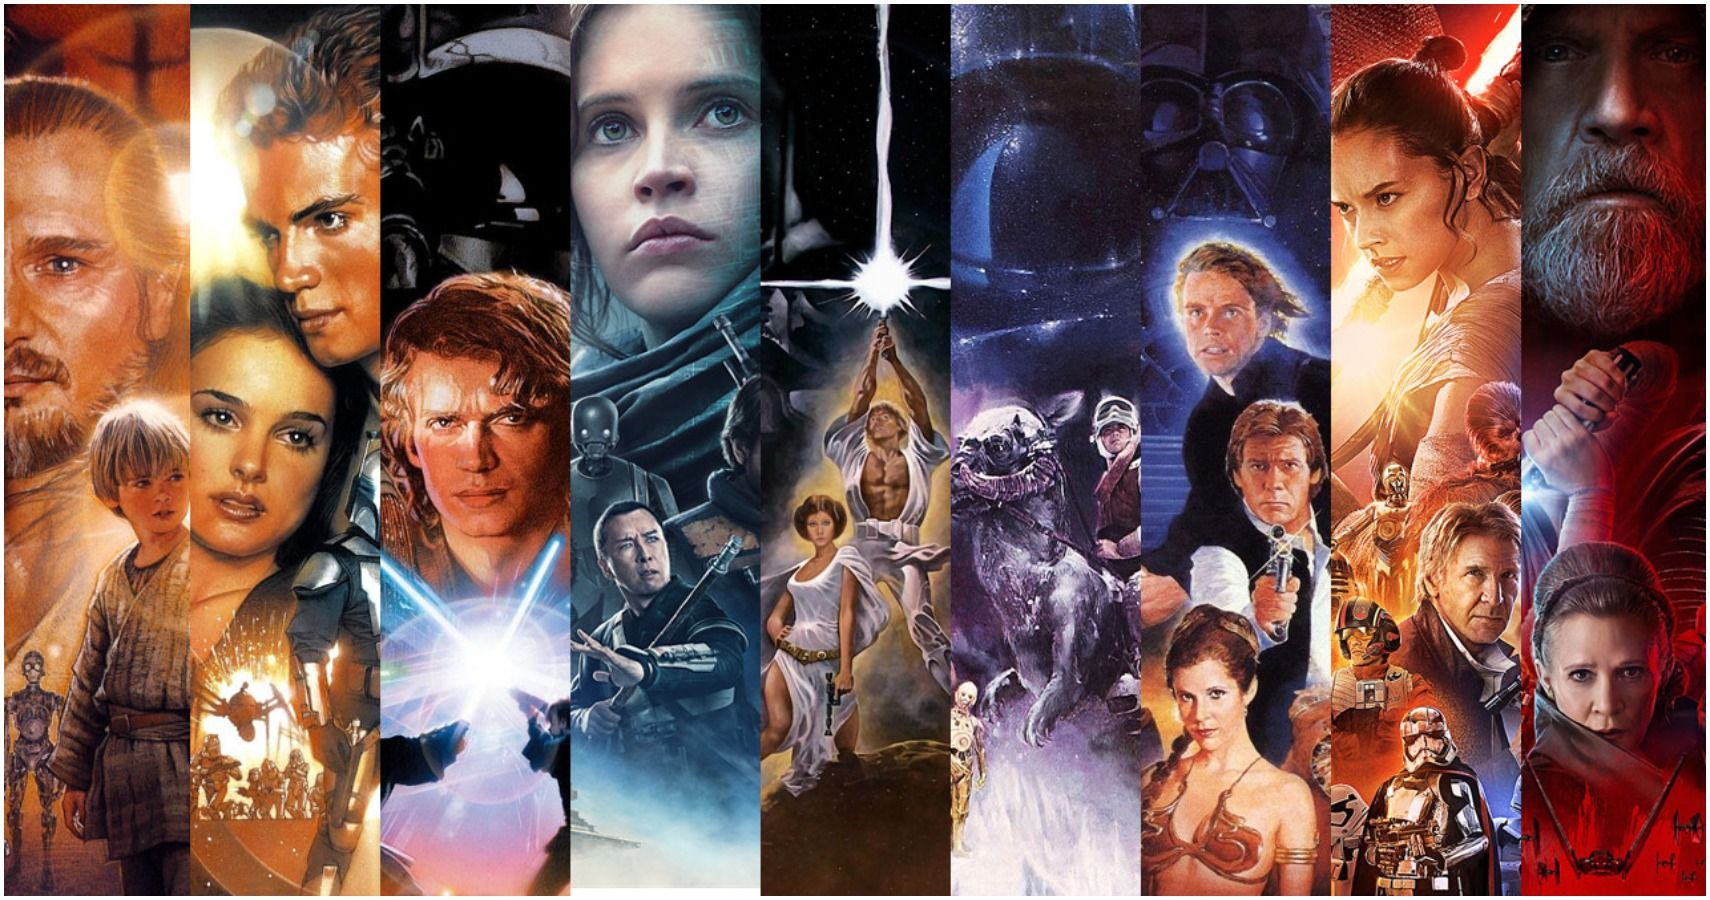 The 10 Weirdest Star Wars Posters From Around The World